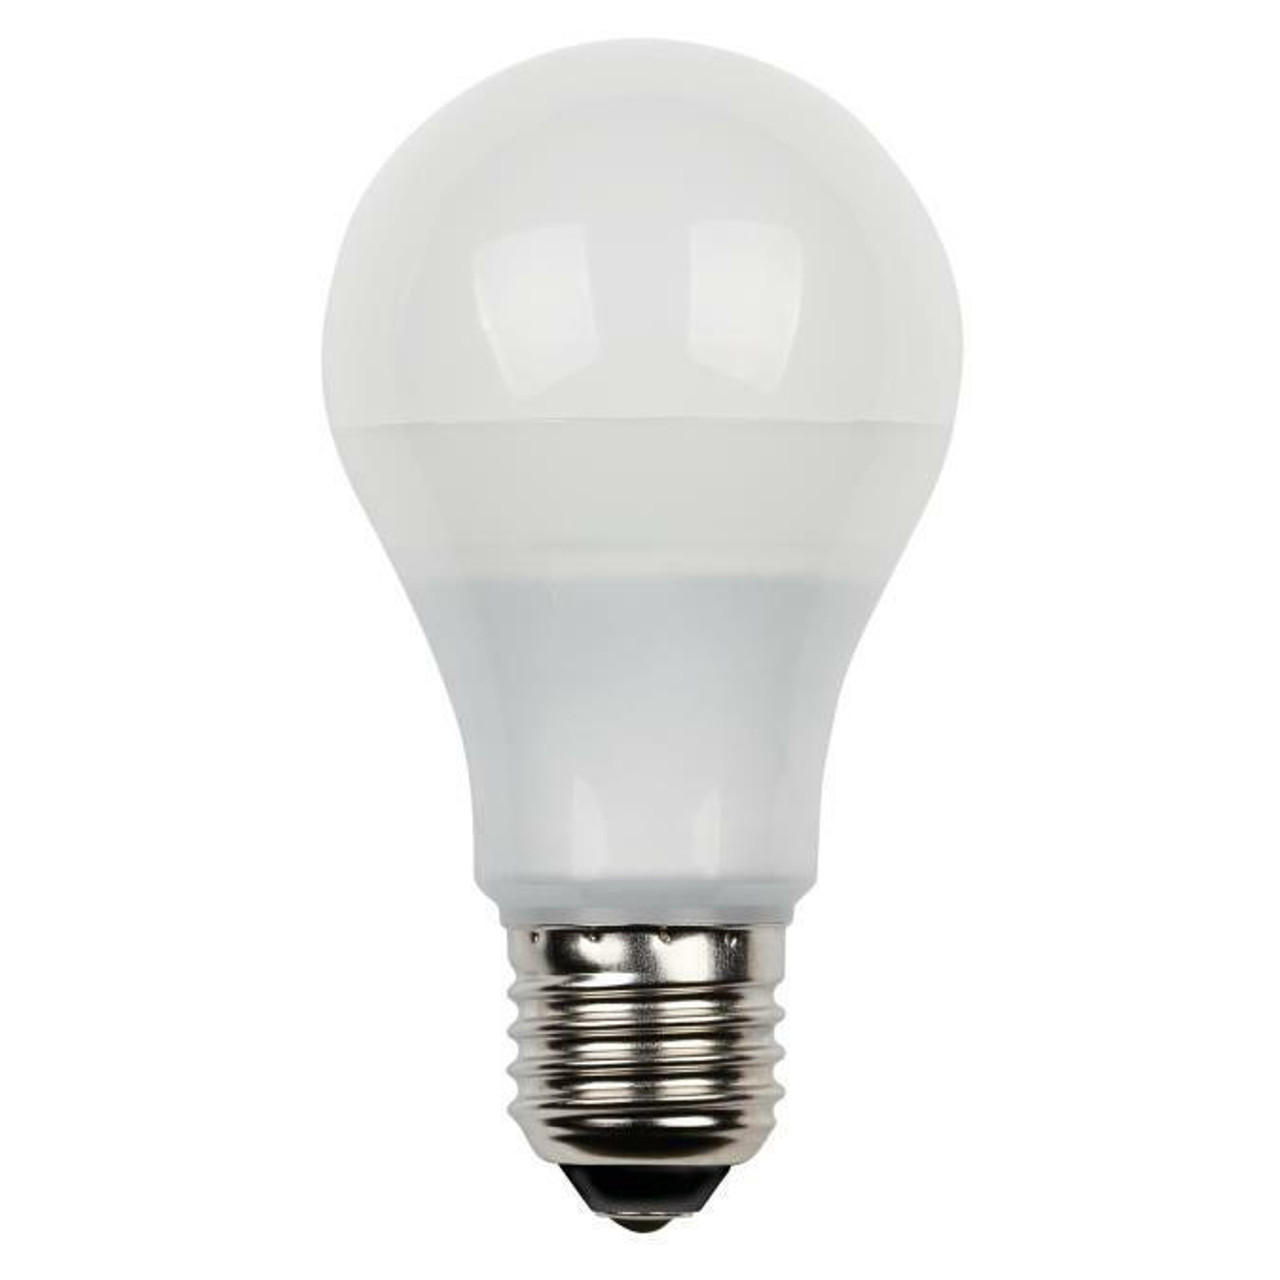 Westinghouse 0342500 6-1/2 Watt (Replaces 40 Watt) Dimmable LED Light Bulb 2700K Warm White E26 Base, 120V Box